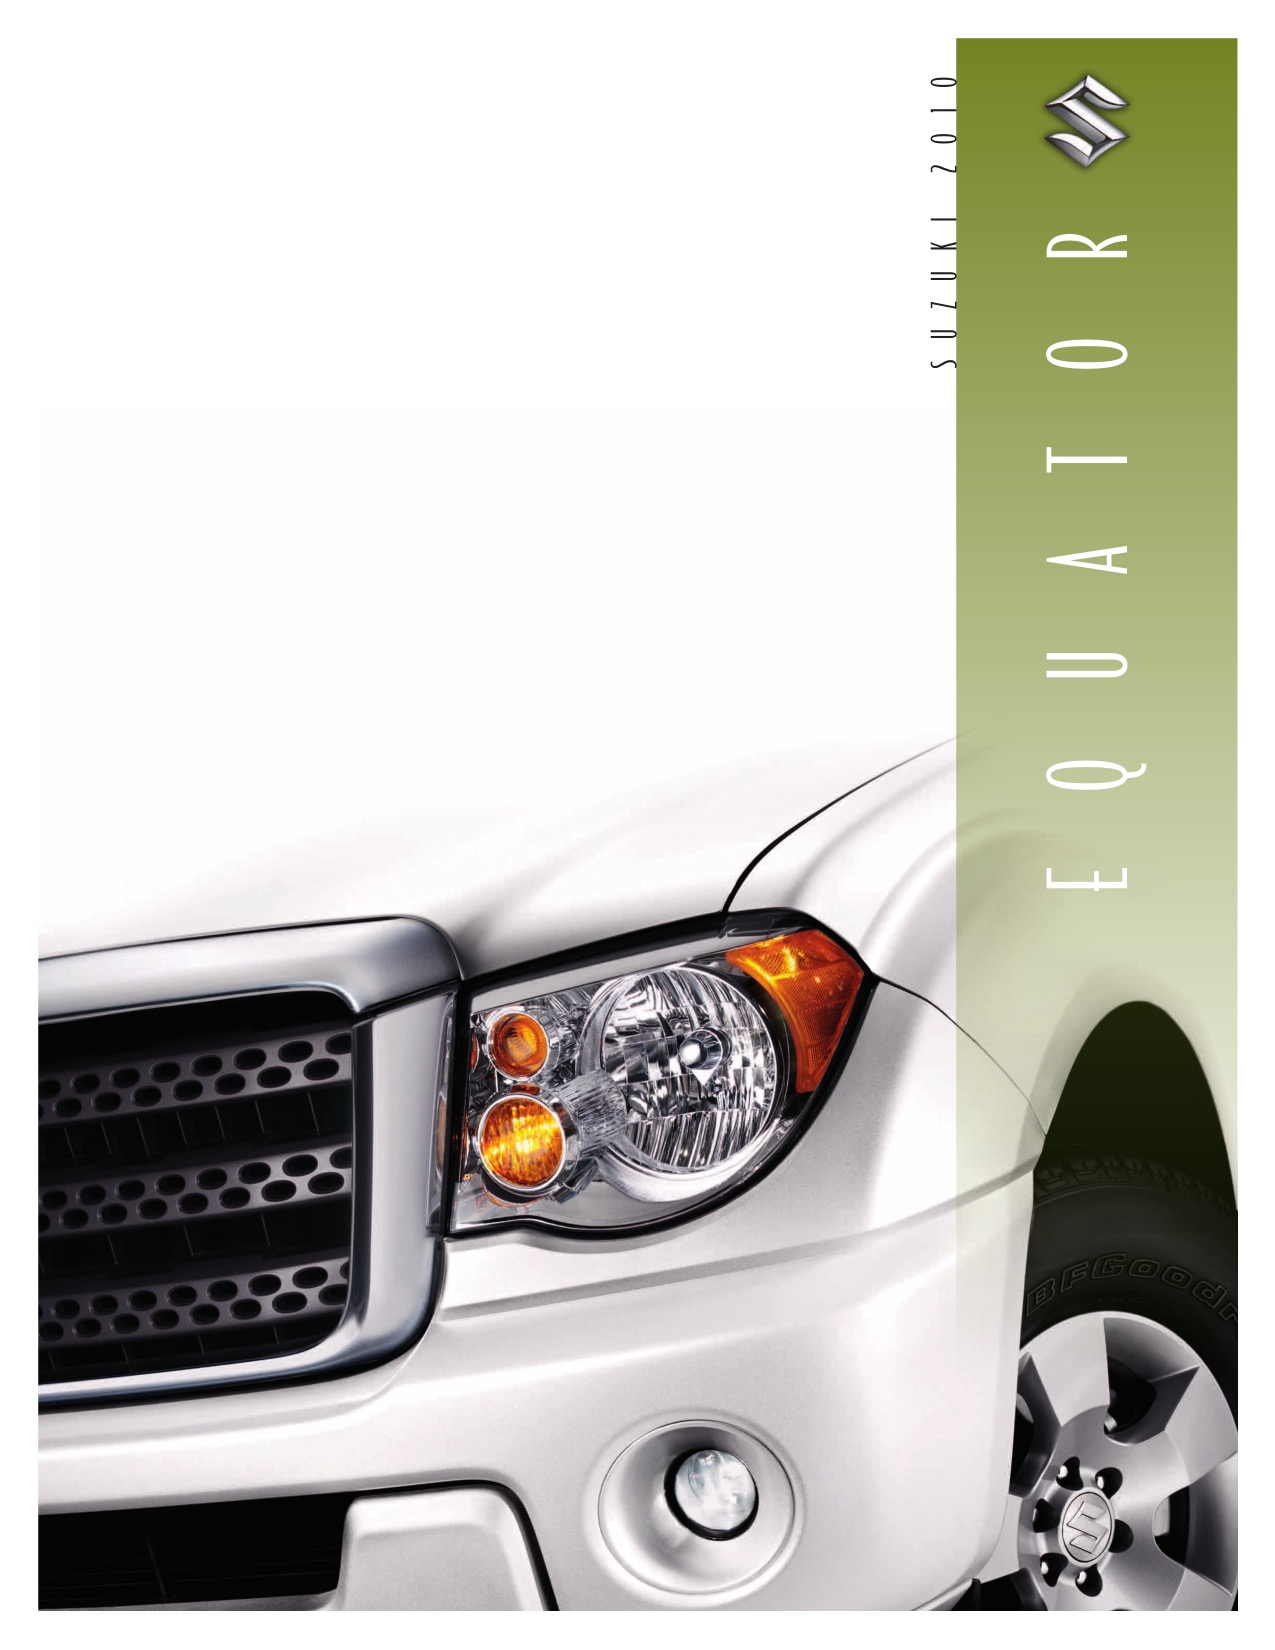 2010 Suzuki Equator Brochure